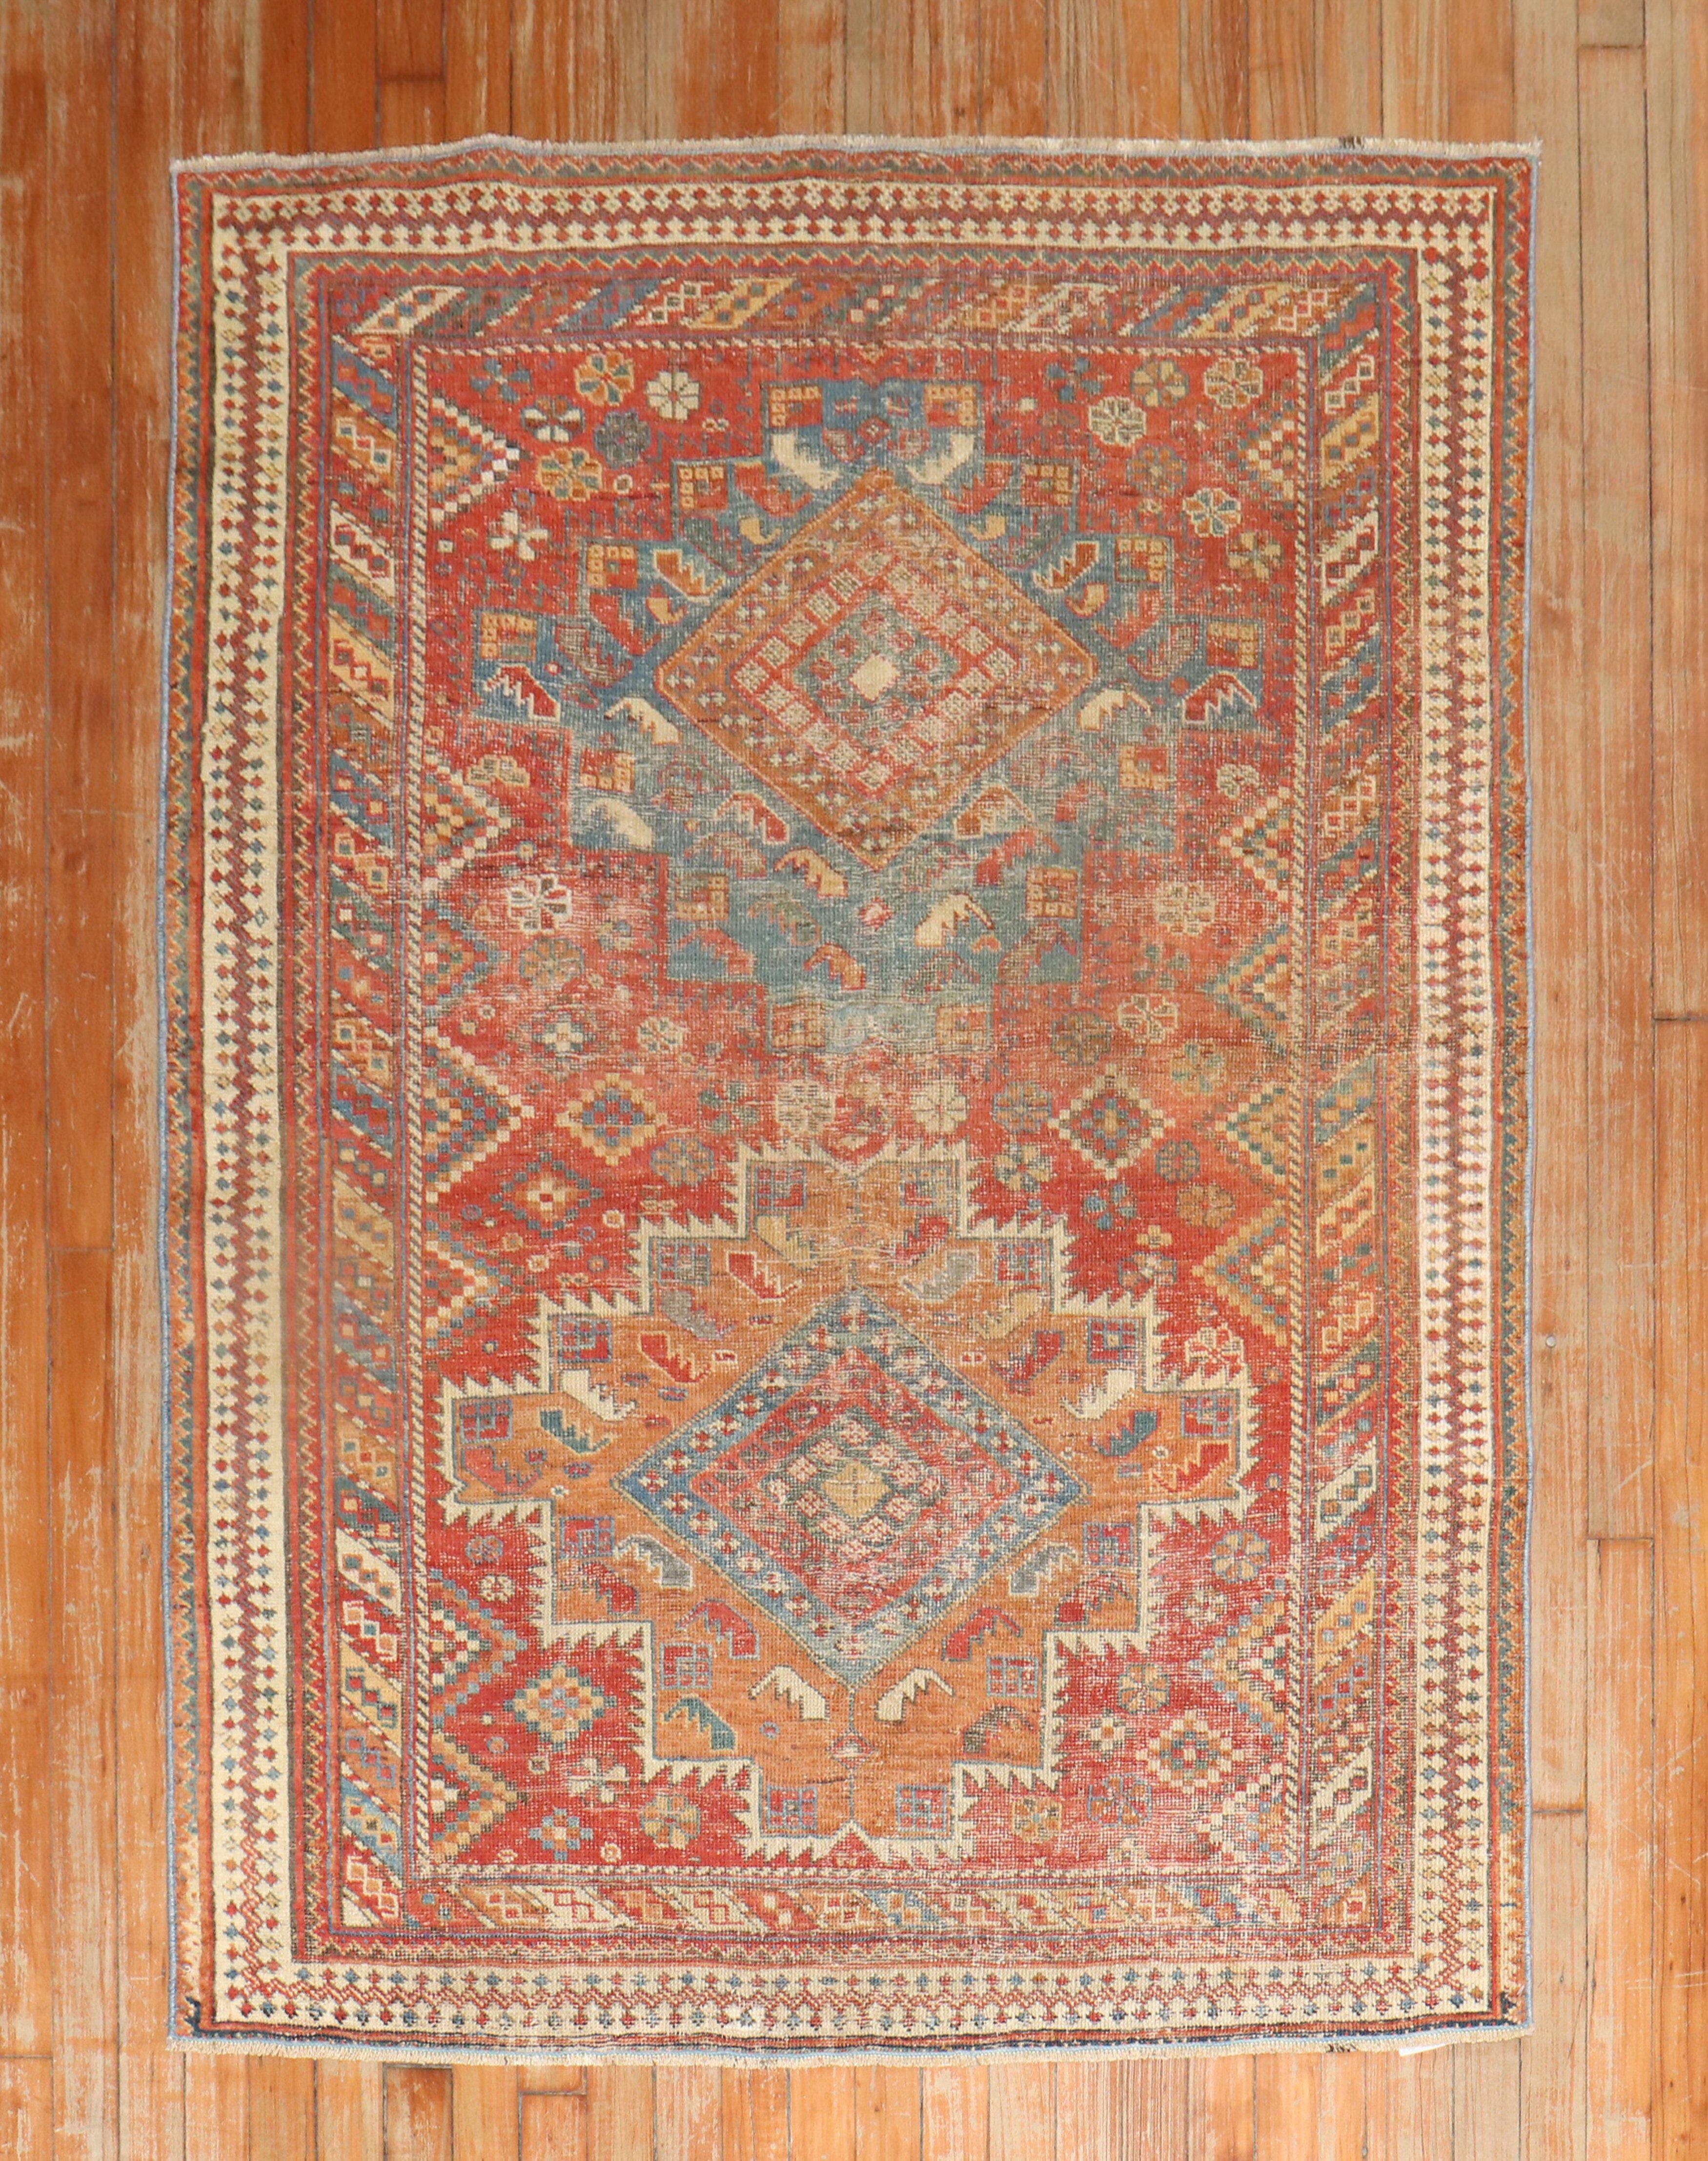 An early 20th-century worn Persian Afshar Tribal rug

Measure: 3'11'' x 5'2''.